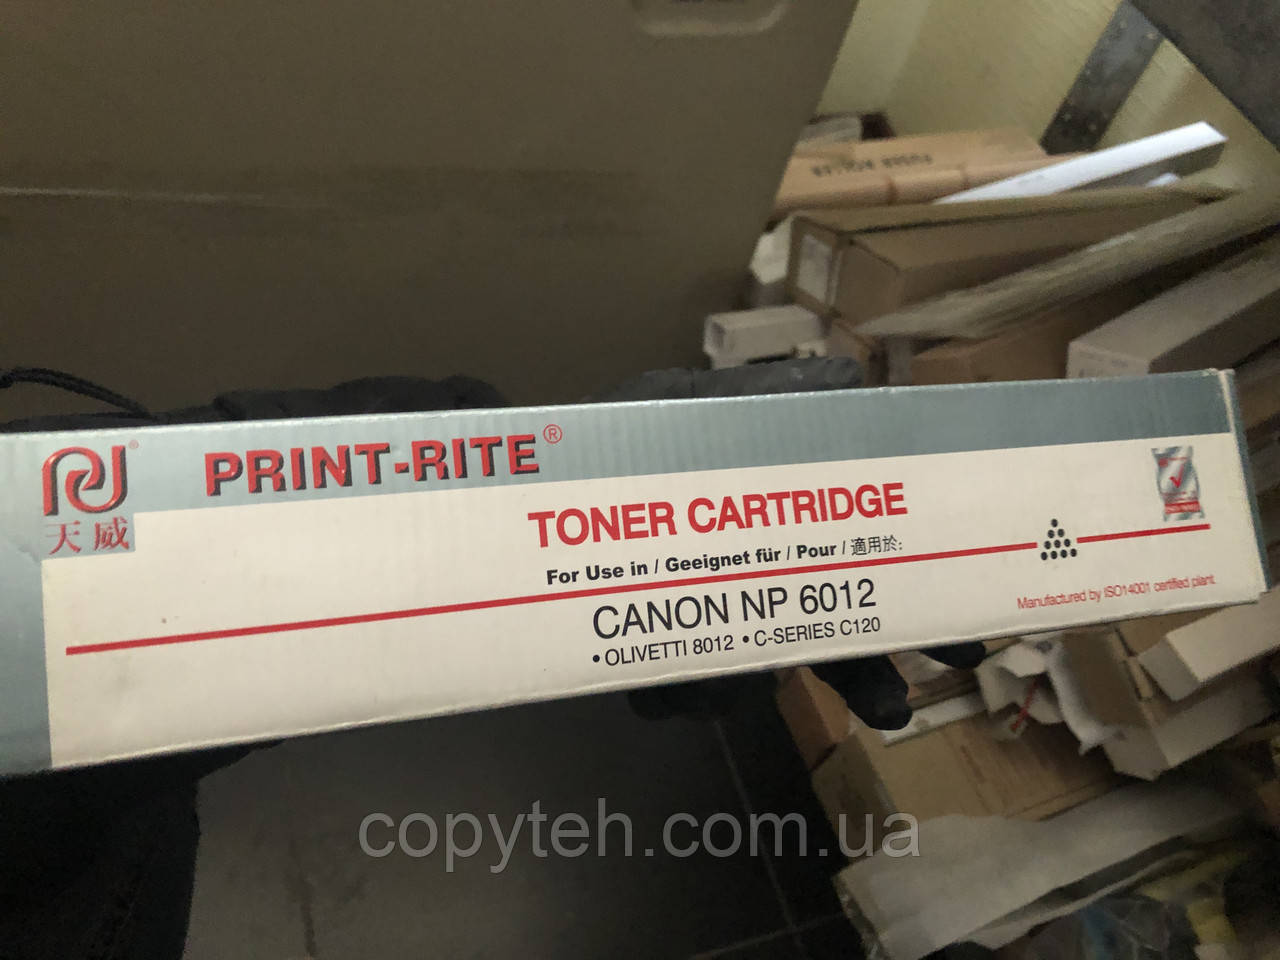 Тонер Print-Rite для Canon NP 6012, Olivetti 8012, C-Series C120 Black (NPG-11)